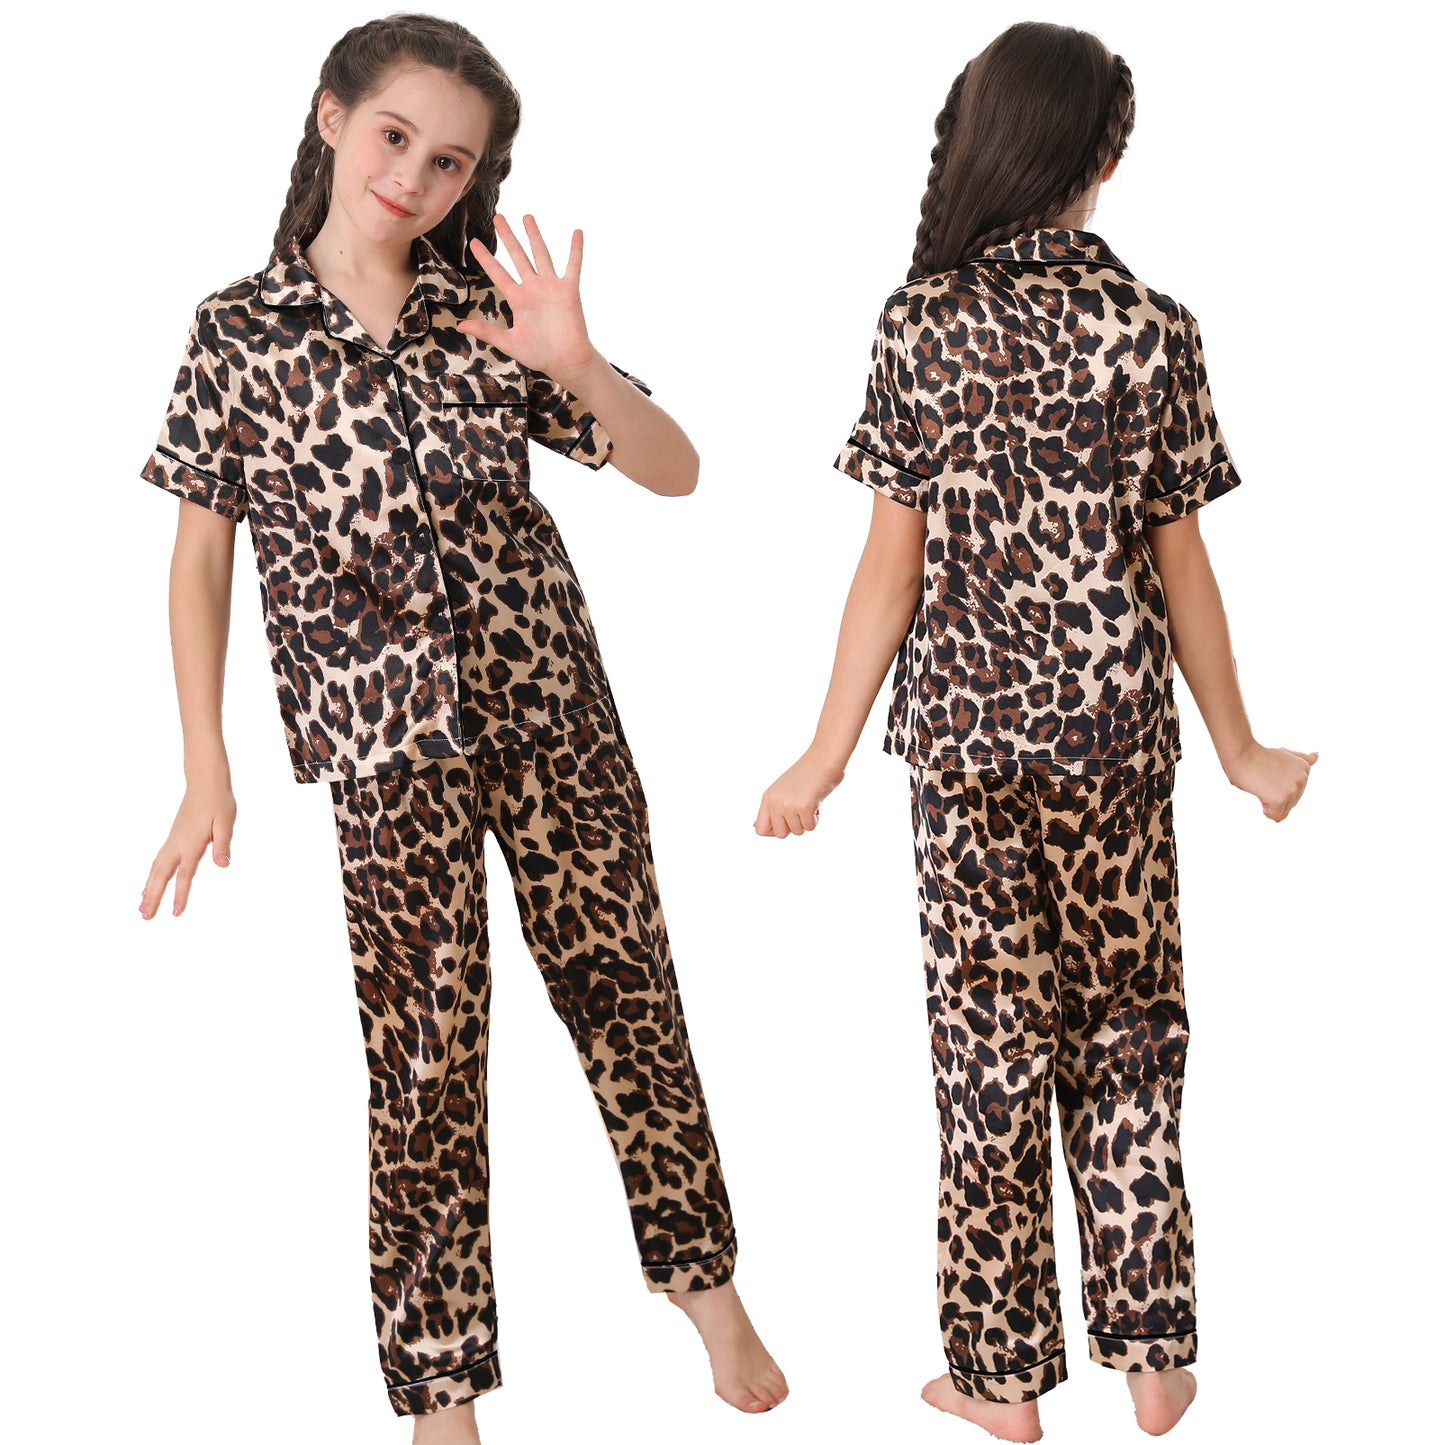 children's Satin Pajamas Set Short Sleeve & long pants Sleepwear with Pockets-KJ512T-130